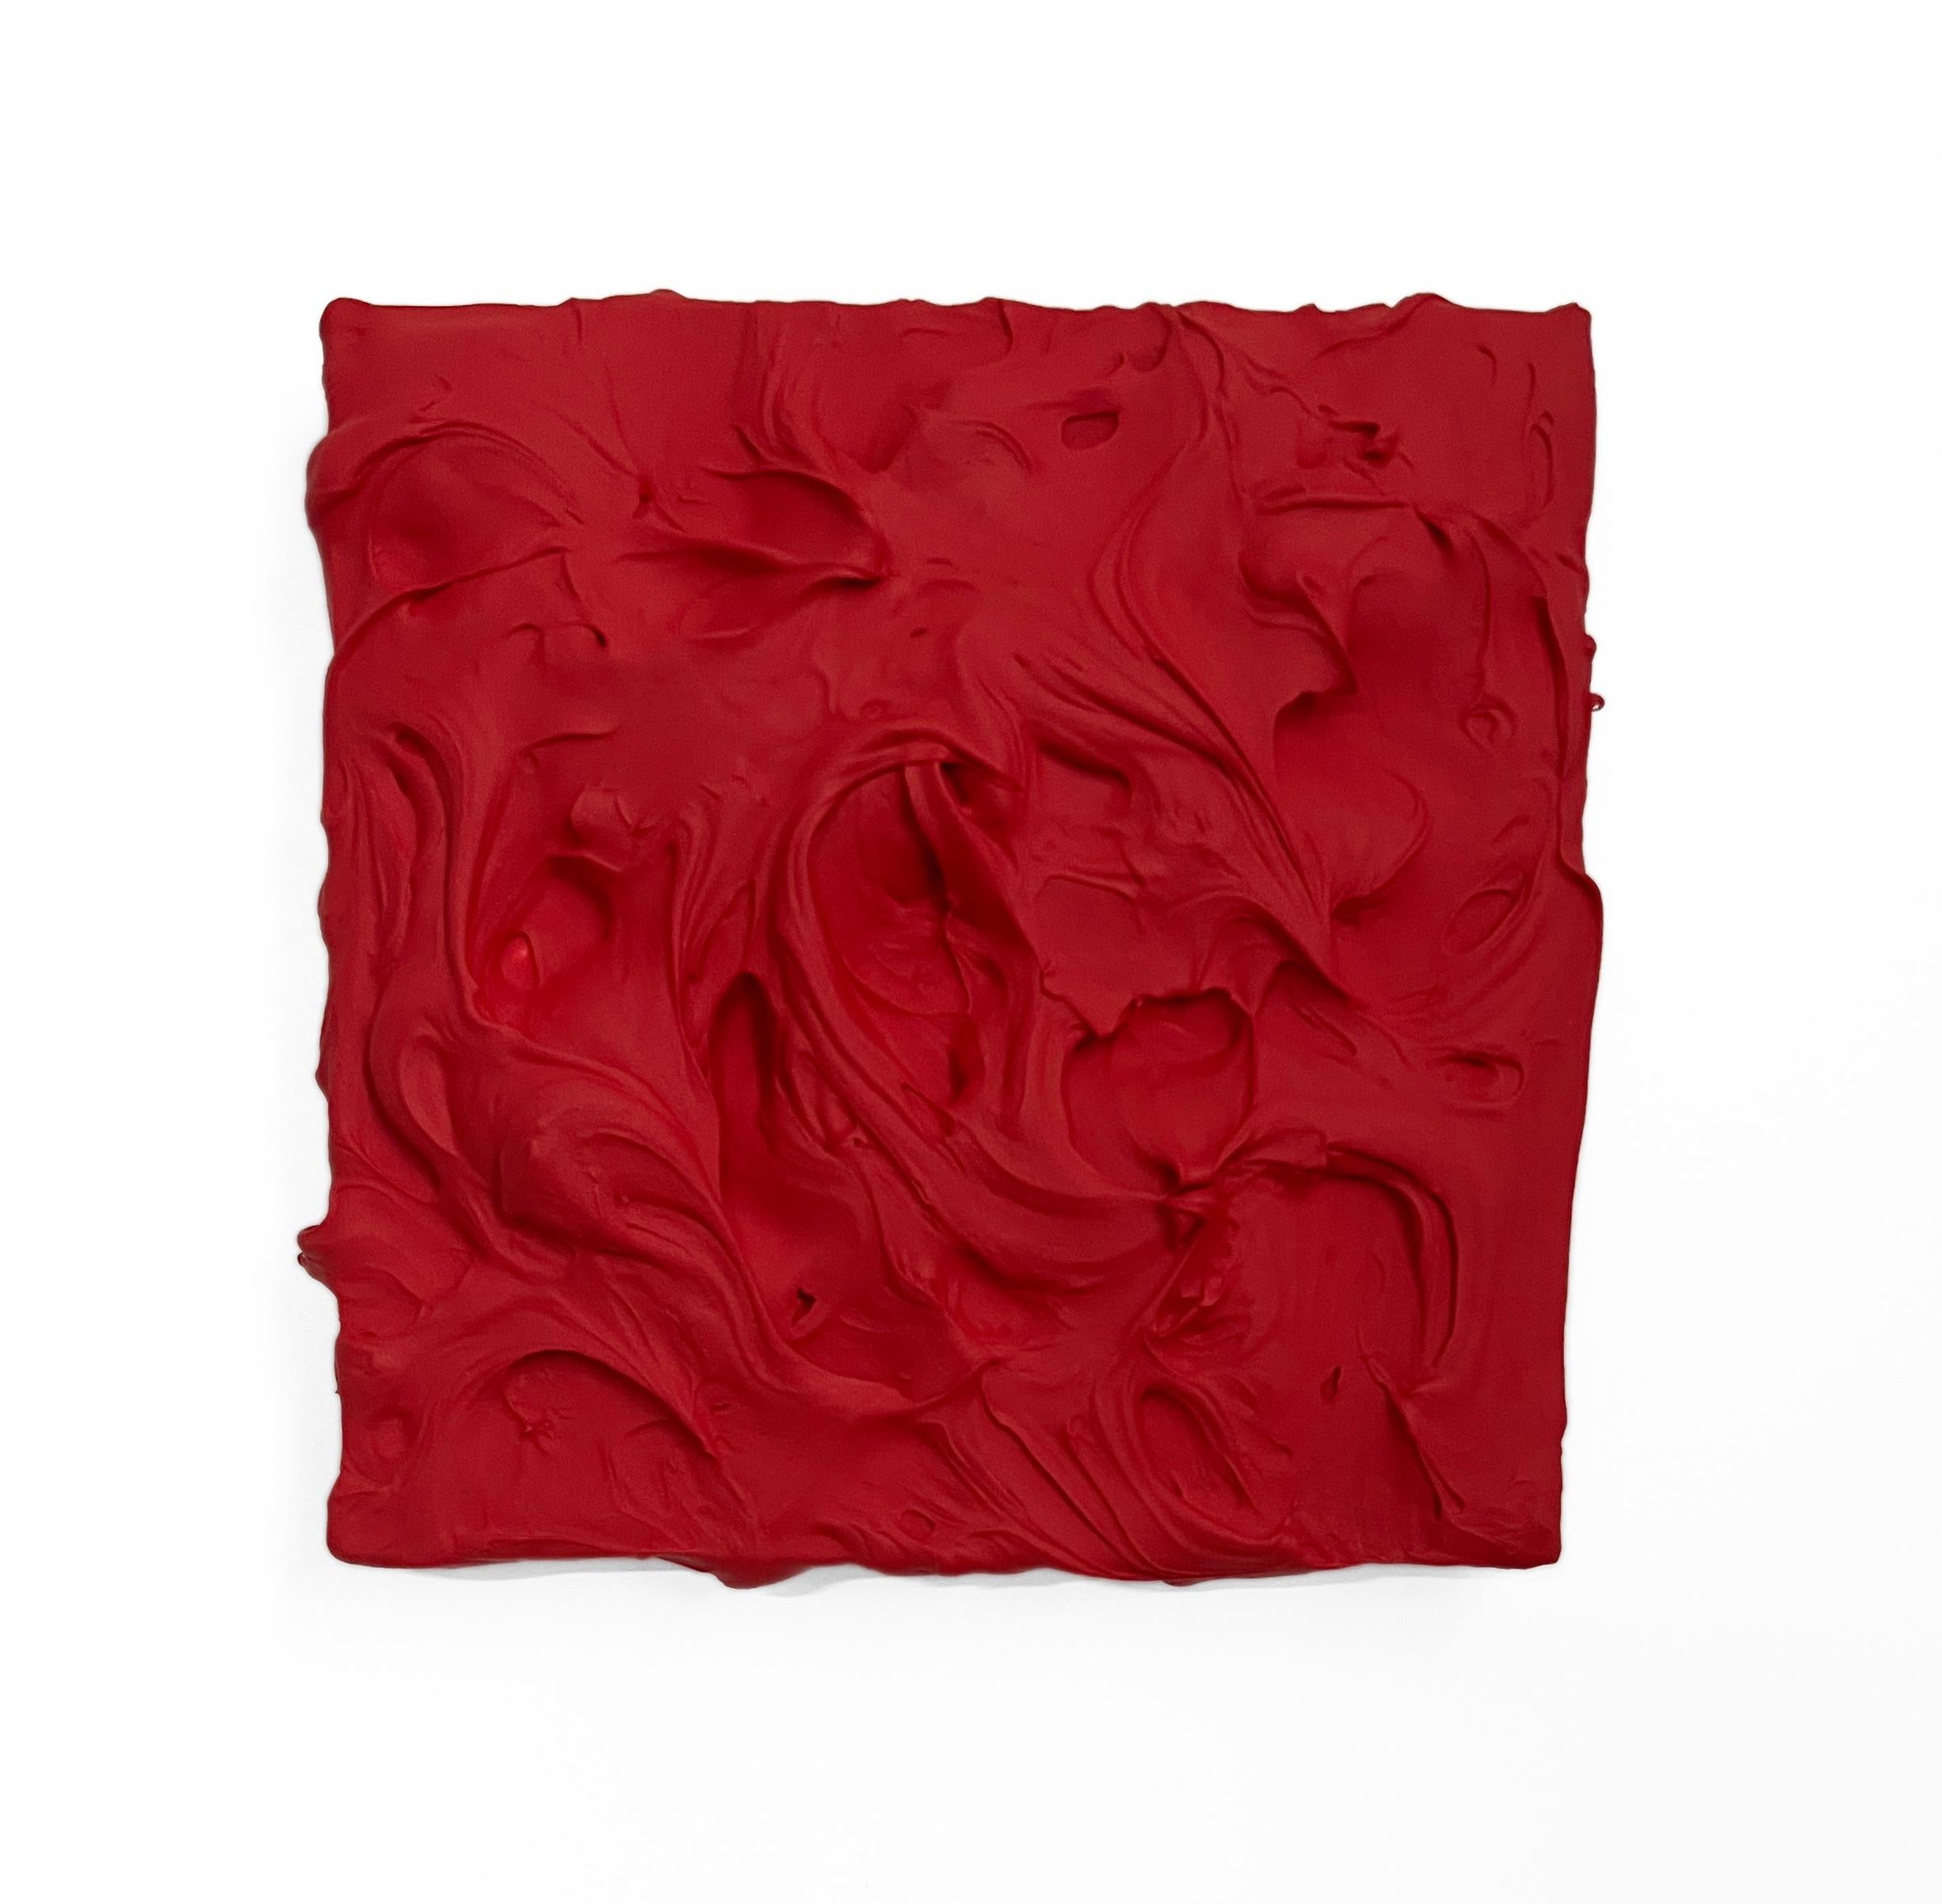 Red Excess (thick impasto painting monochrome pop art square design)